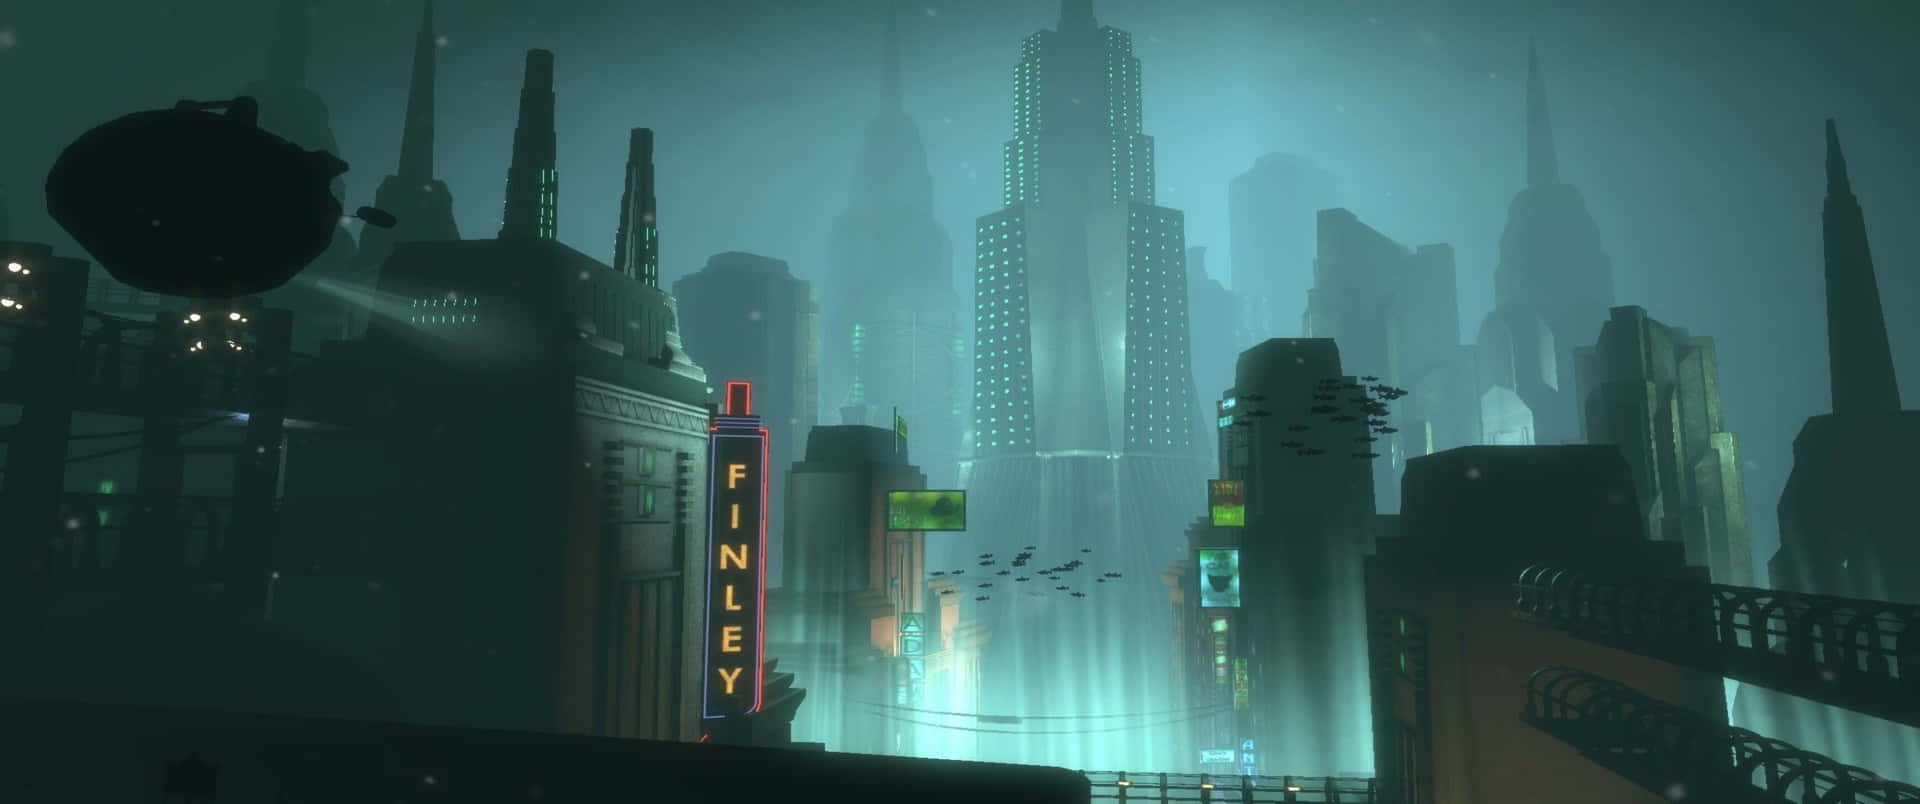 City Of Rapture 3440x1440p Bioshock Infinite Background